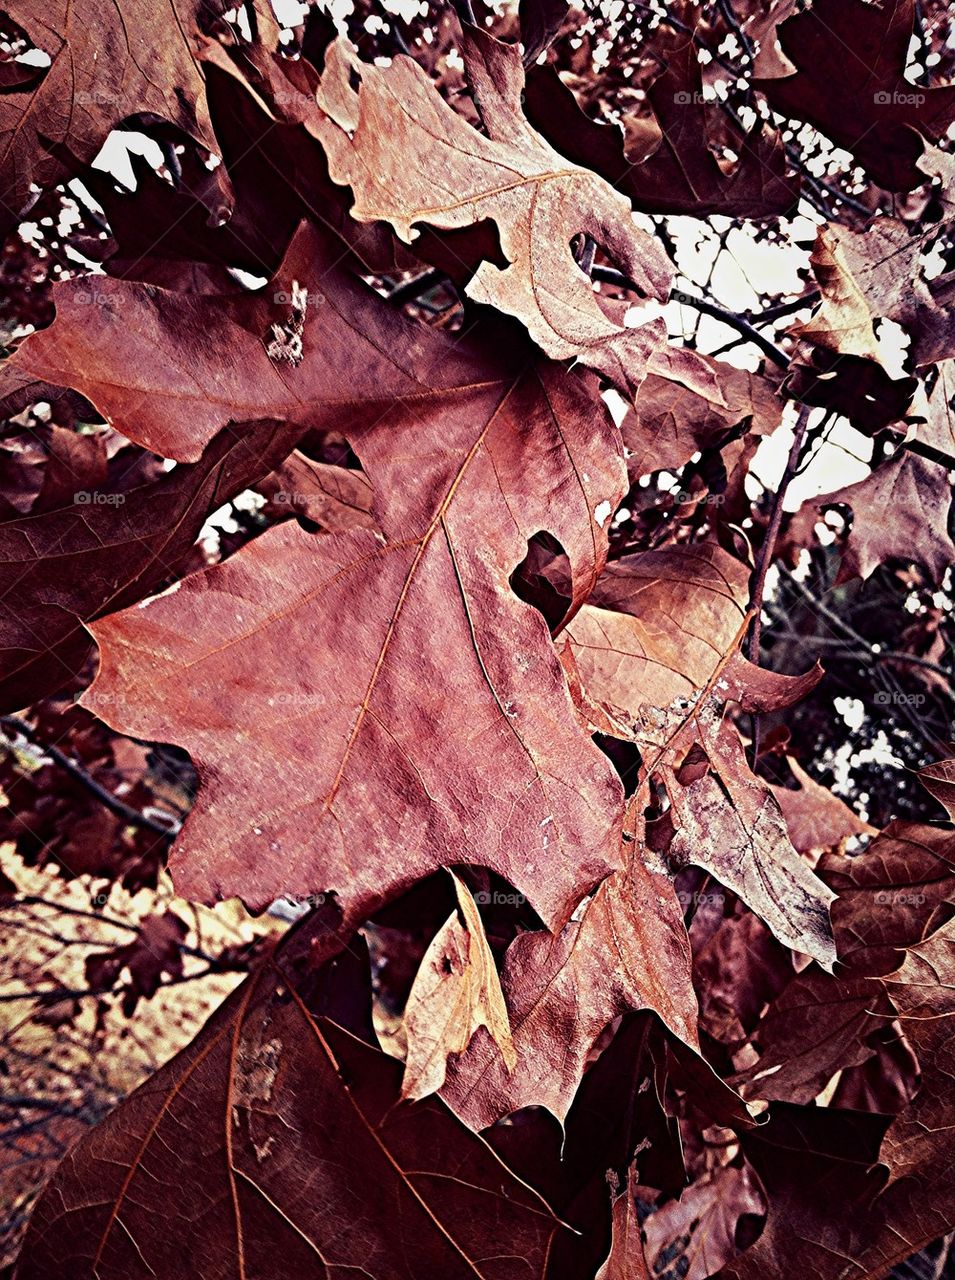 The Last Leaves of Autumn